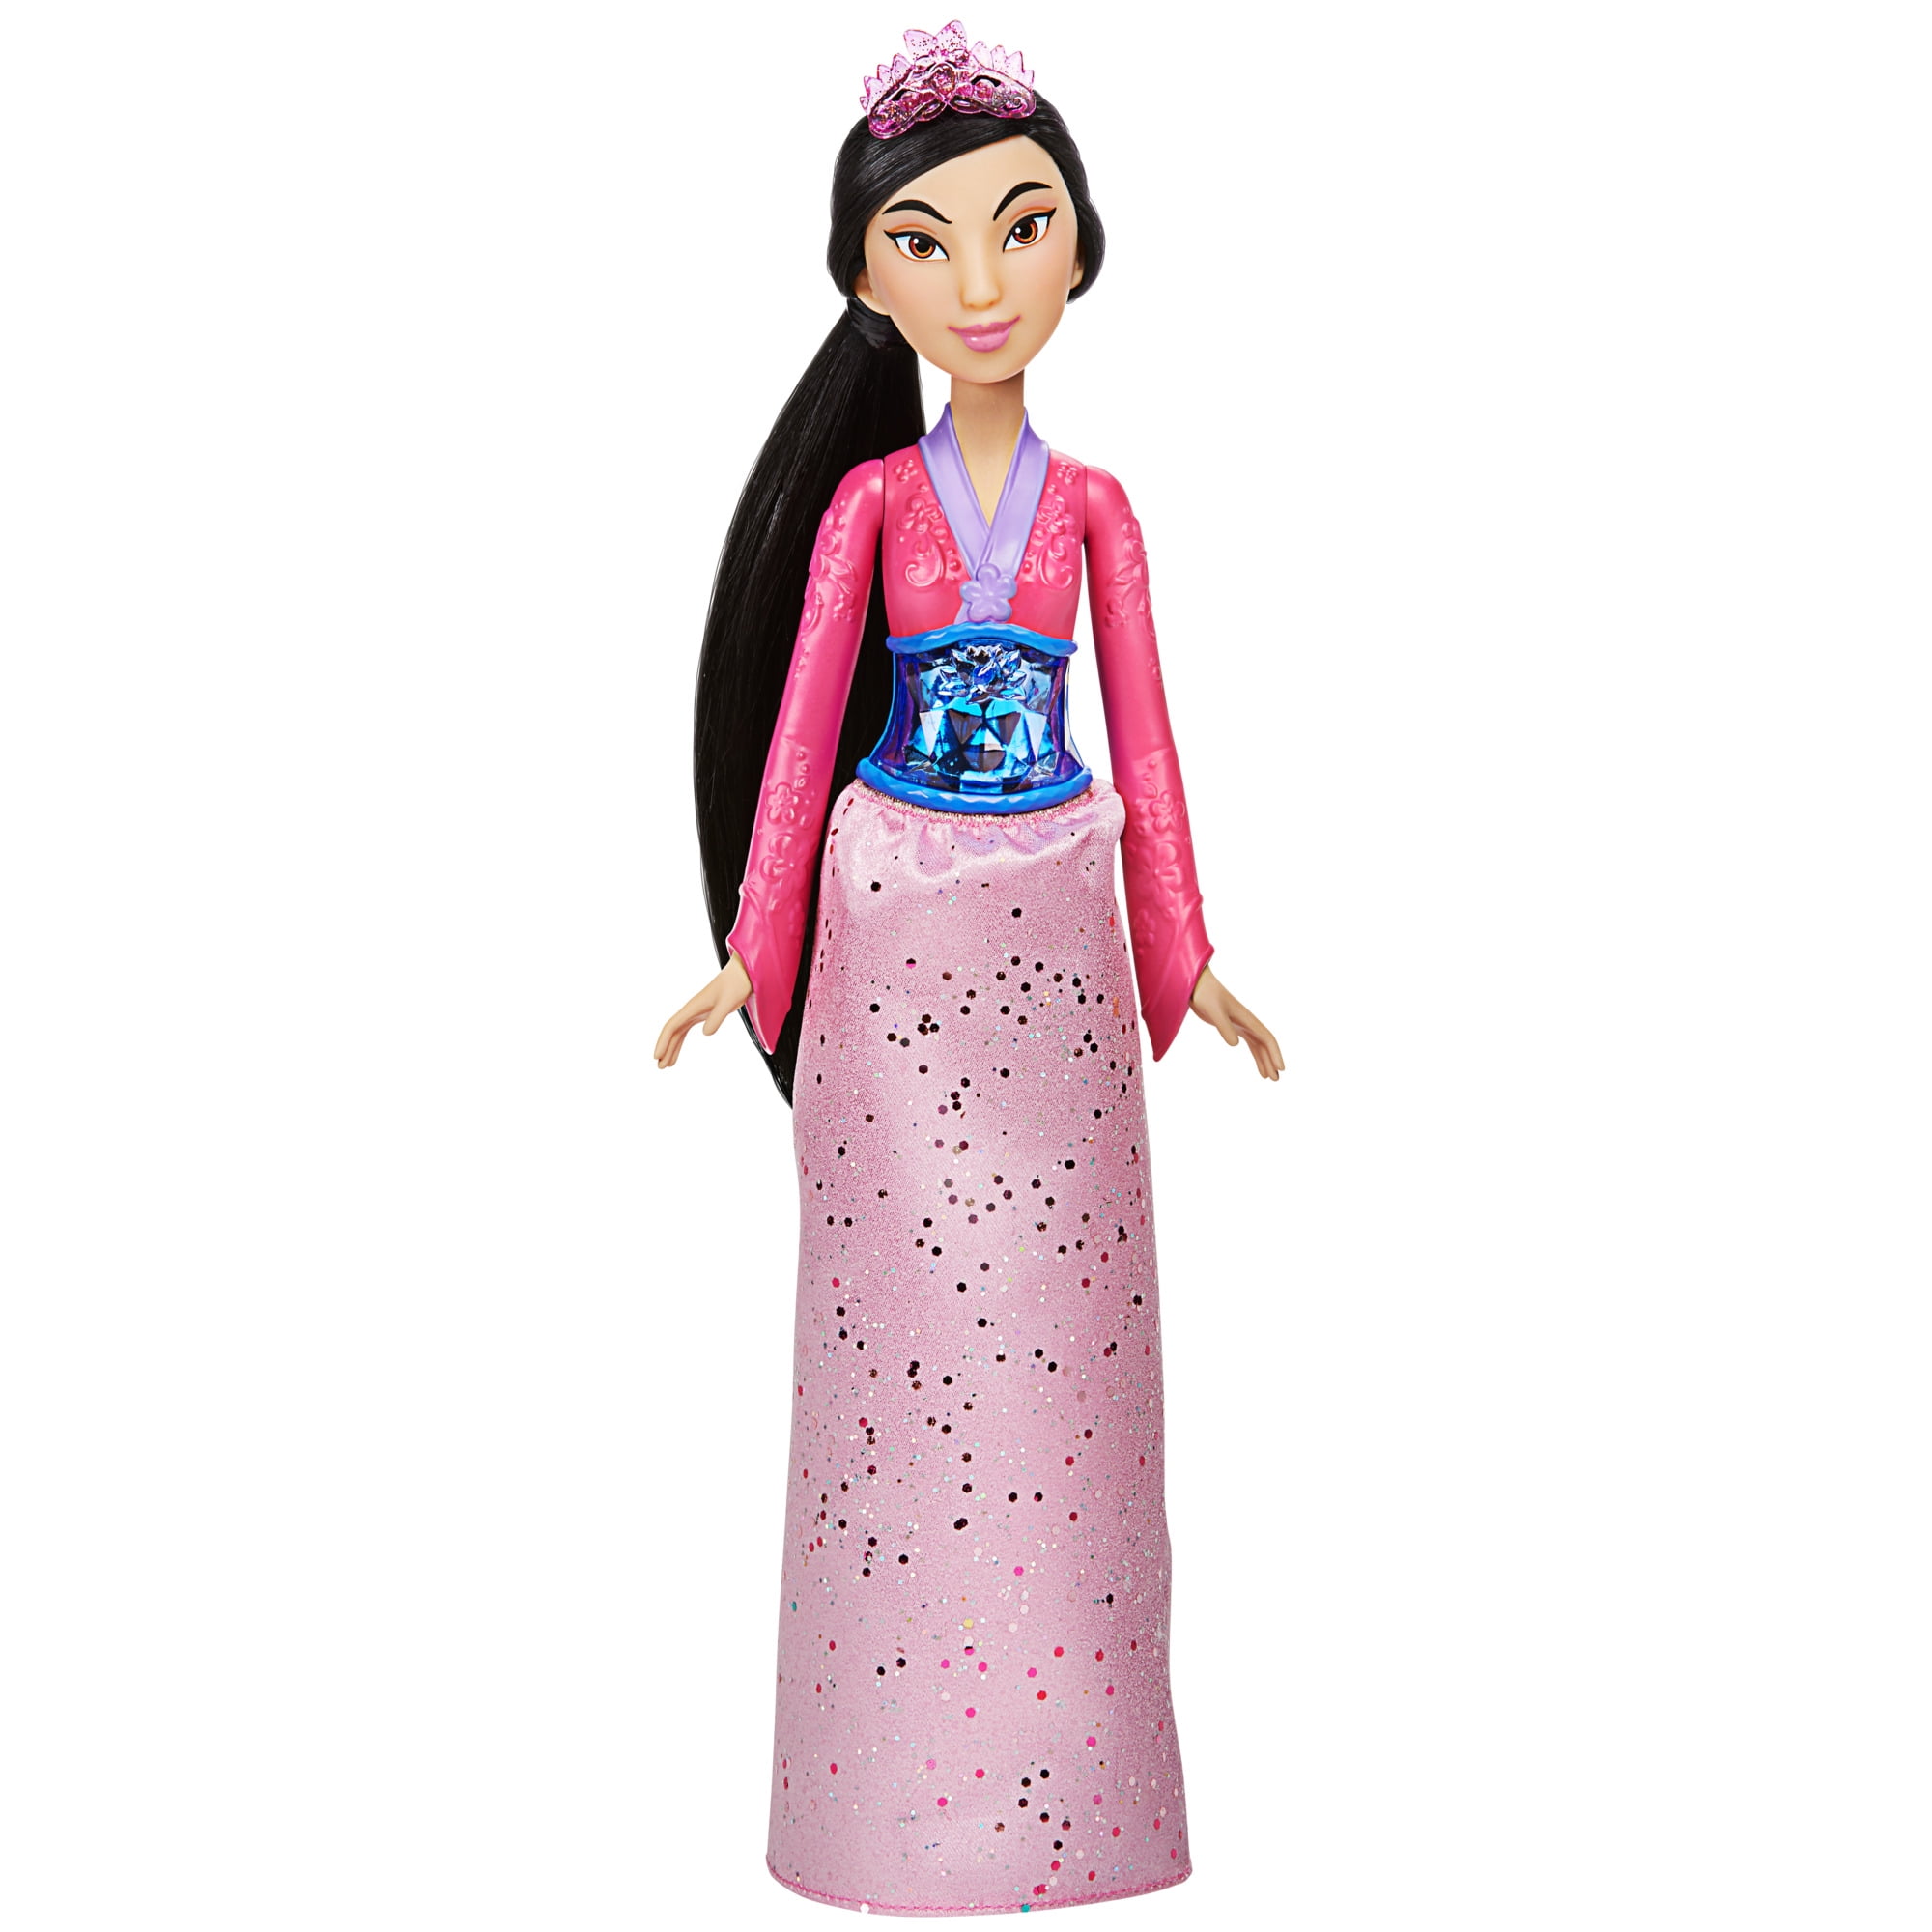 Disney Princess Royal Shimmer Mulan Fashion Doll, Accessories Included